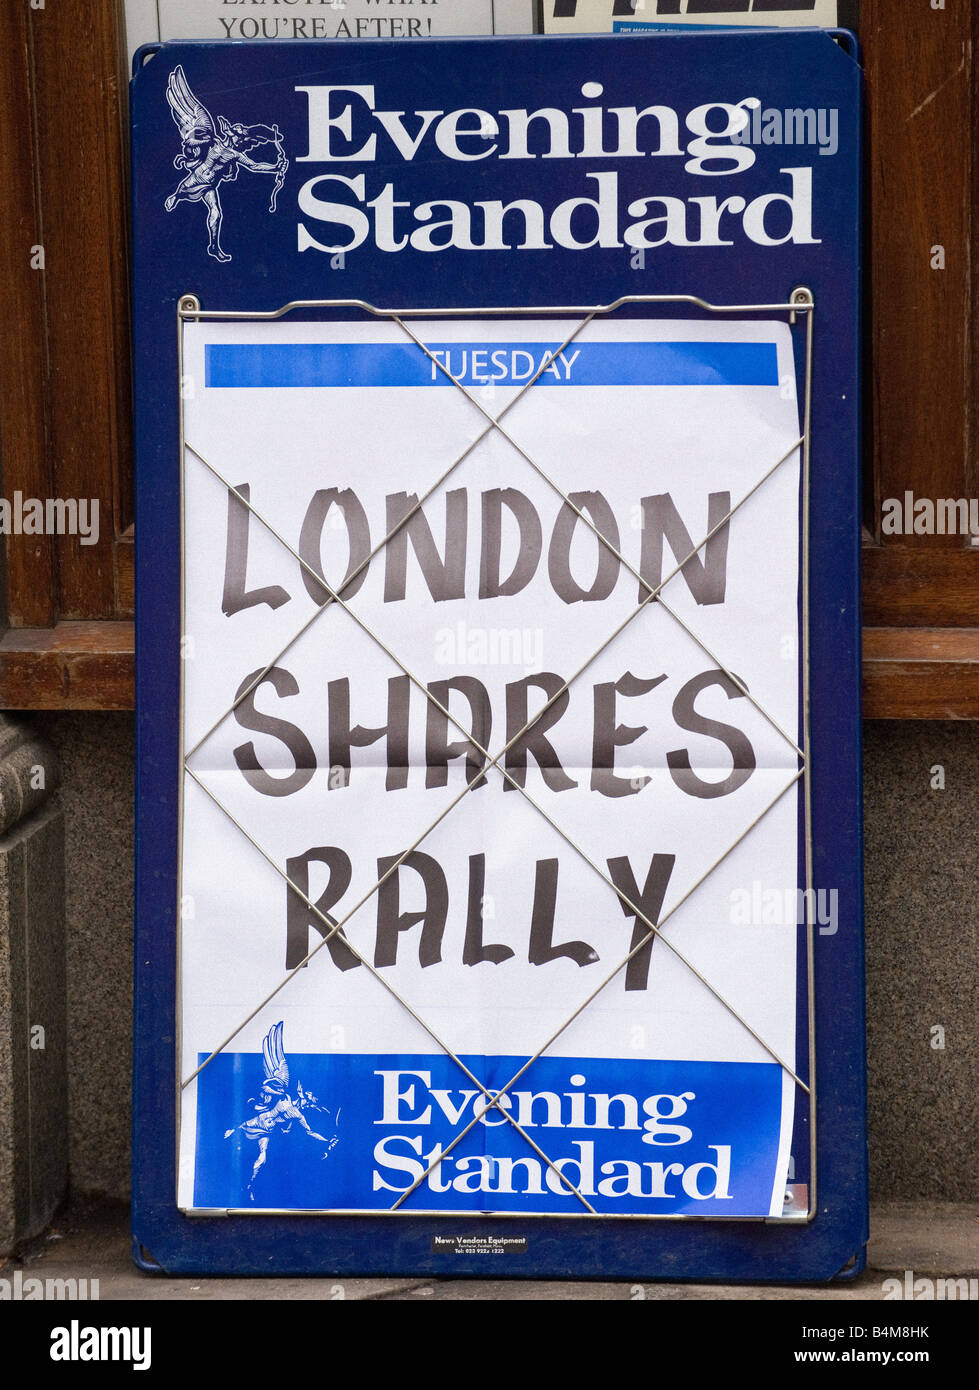 Evening Standard headline. London Shares Rally. Stock Photo